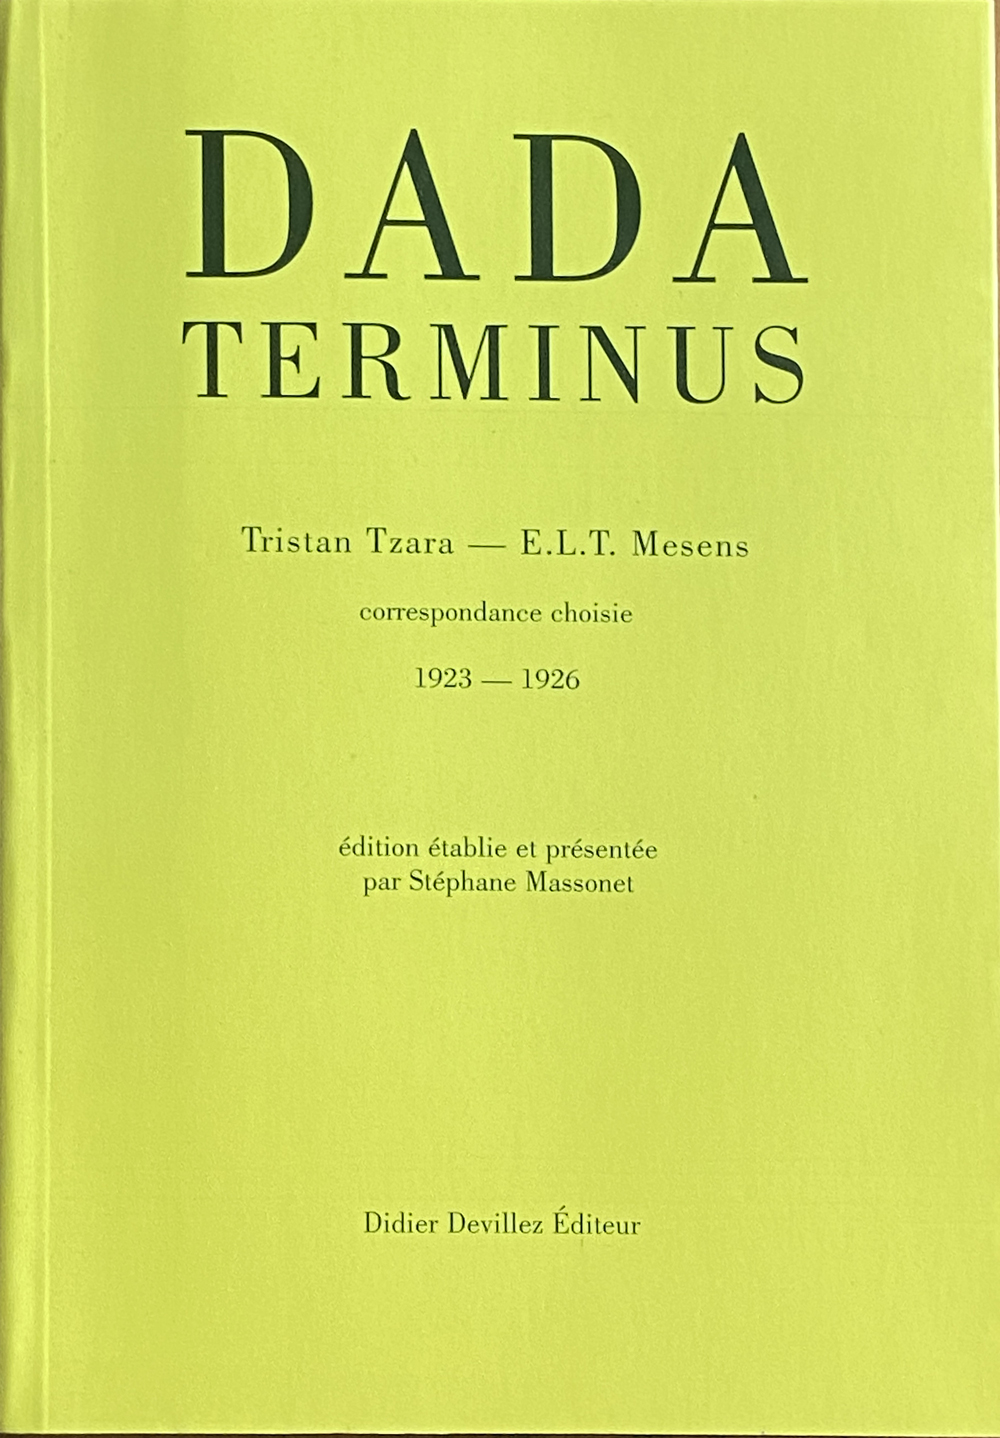 Dada terminus : Tristan Tzara - E.L.T Mesens : correspondance choisie (1923-1926)